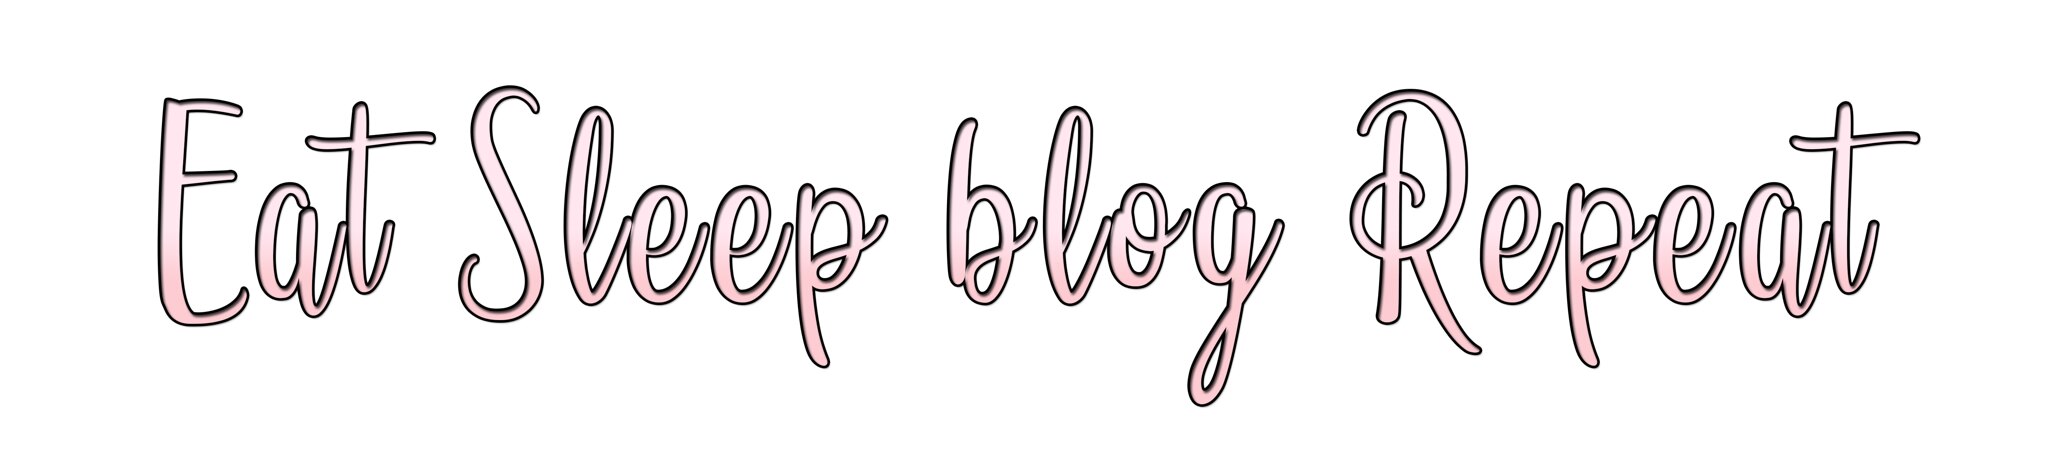 ❤ My blog title ❤